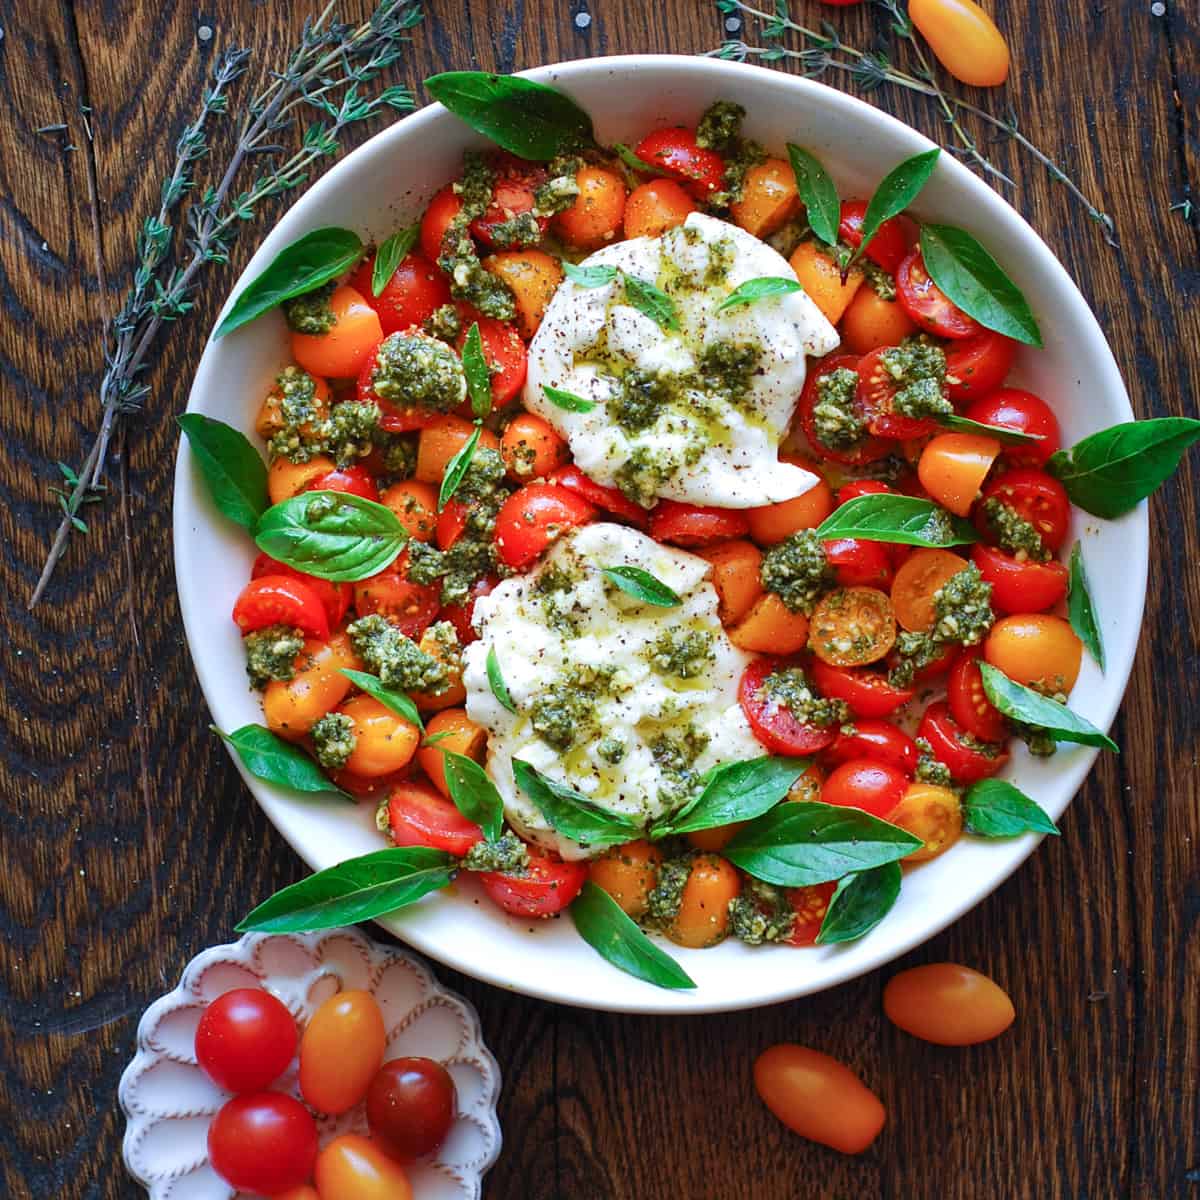 Tomato Burrata Salad with Cherry Tomatoes, Basil Pesto, and Fresh Basil Leaves - on a white plate.